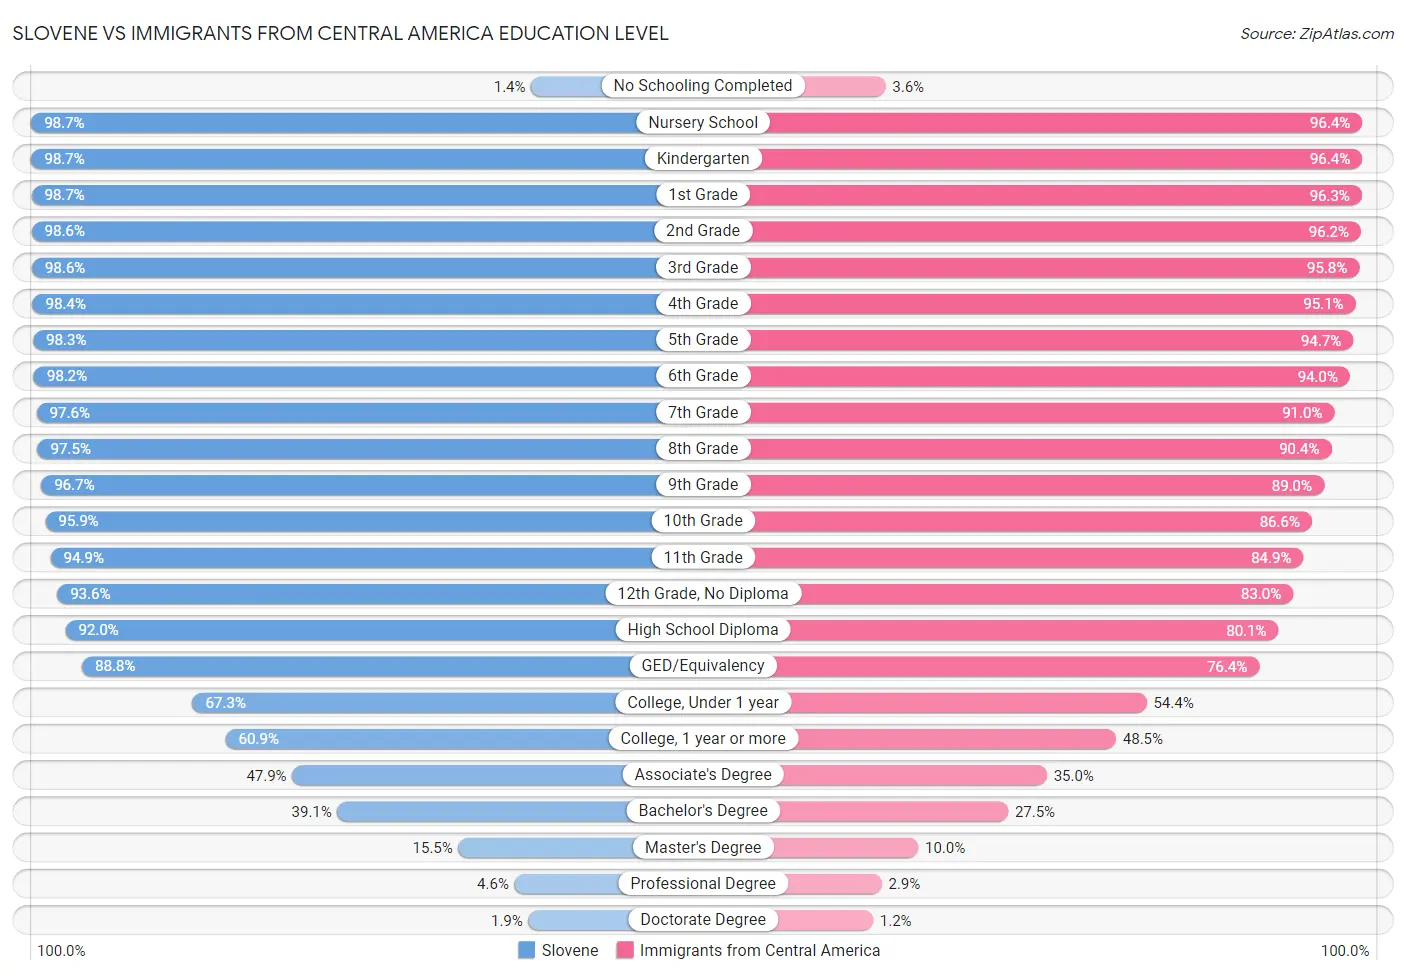 Slovene vs Immigrants from Central America Education Level